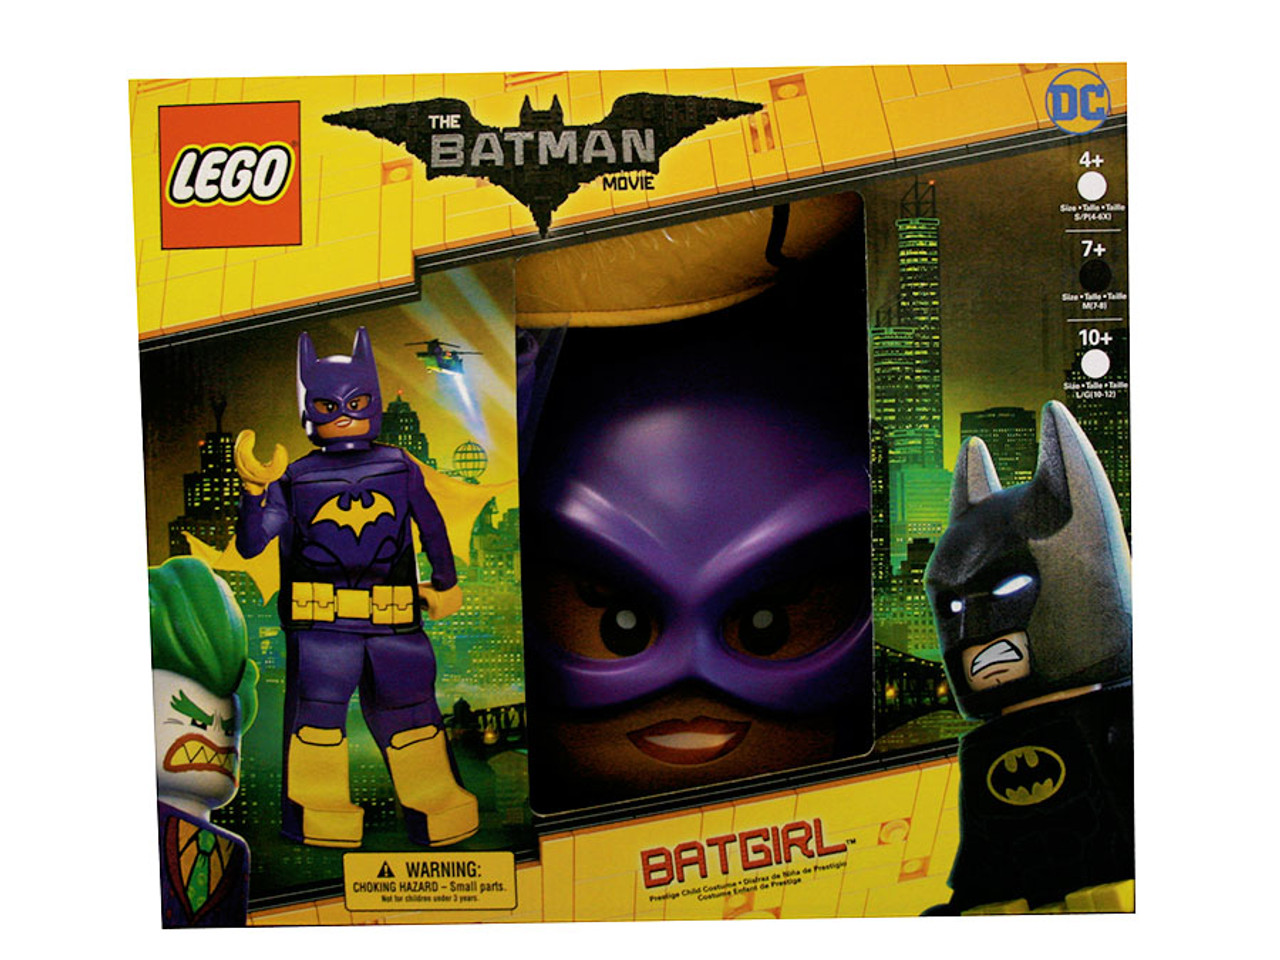 Disguise Batman Lego Movie 2 Deluxe Boy\'s Halloween Fancy-Dress Costume  for Child, M 